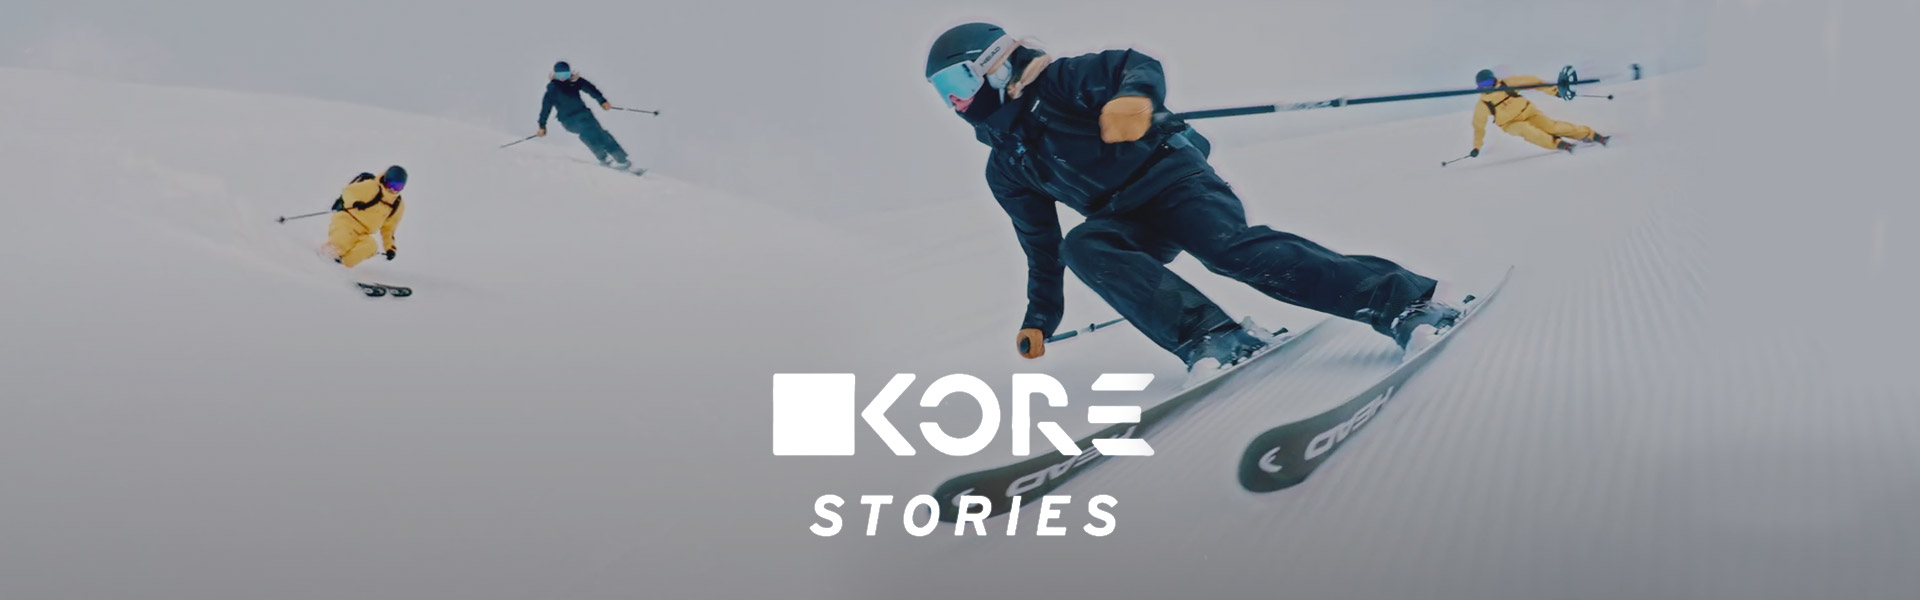 KORE Stories: Weekend Warriors